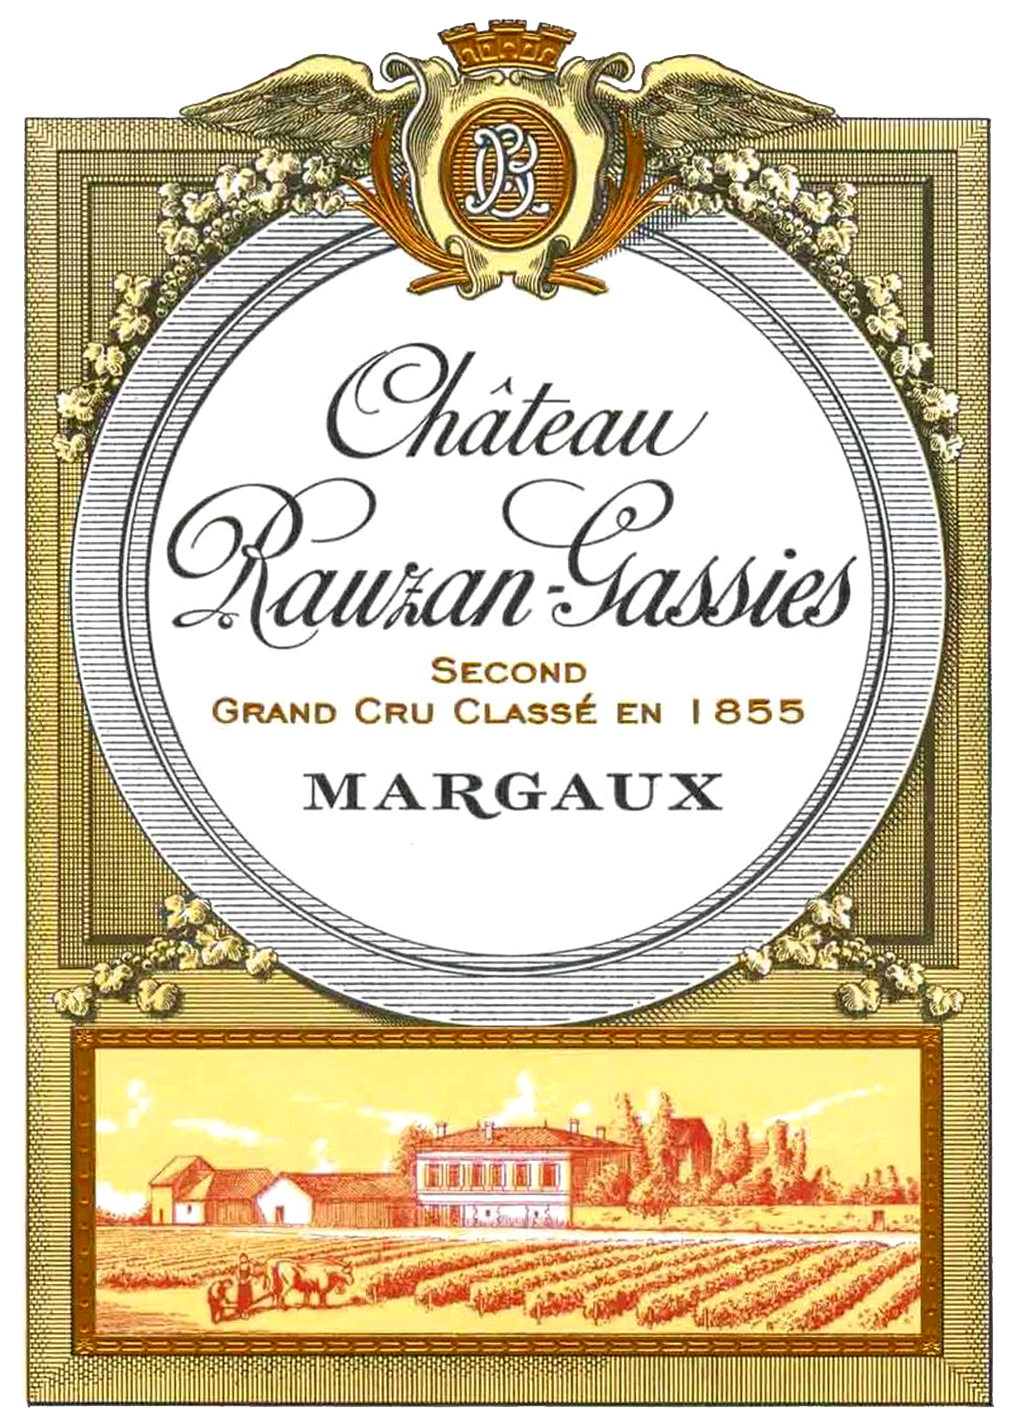 Rauzan Gassies, Bordeaux, Margaux, France, AOC, 2eme Cru Classe